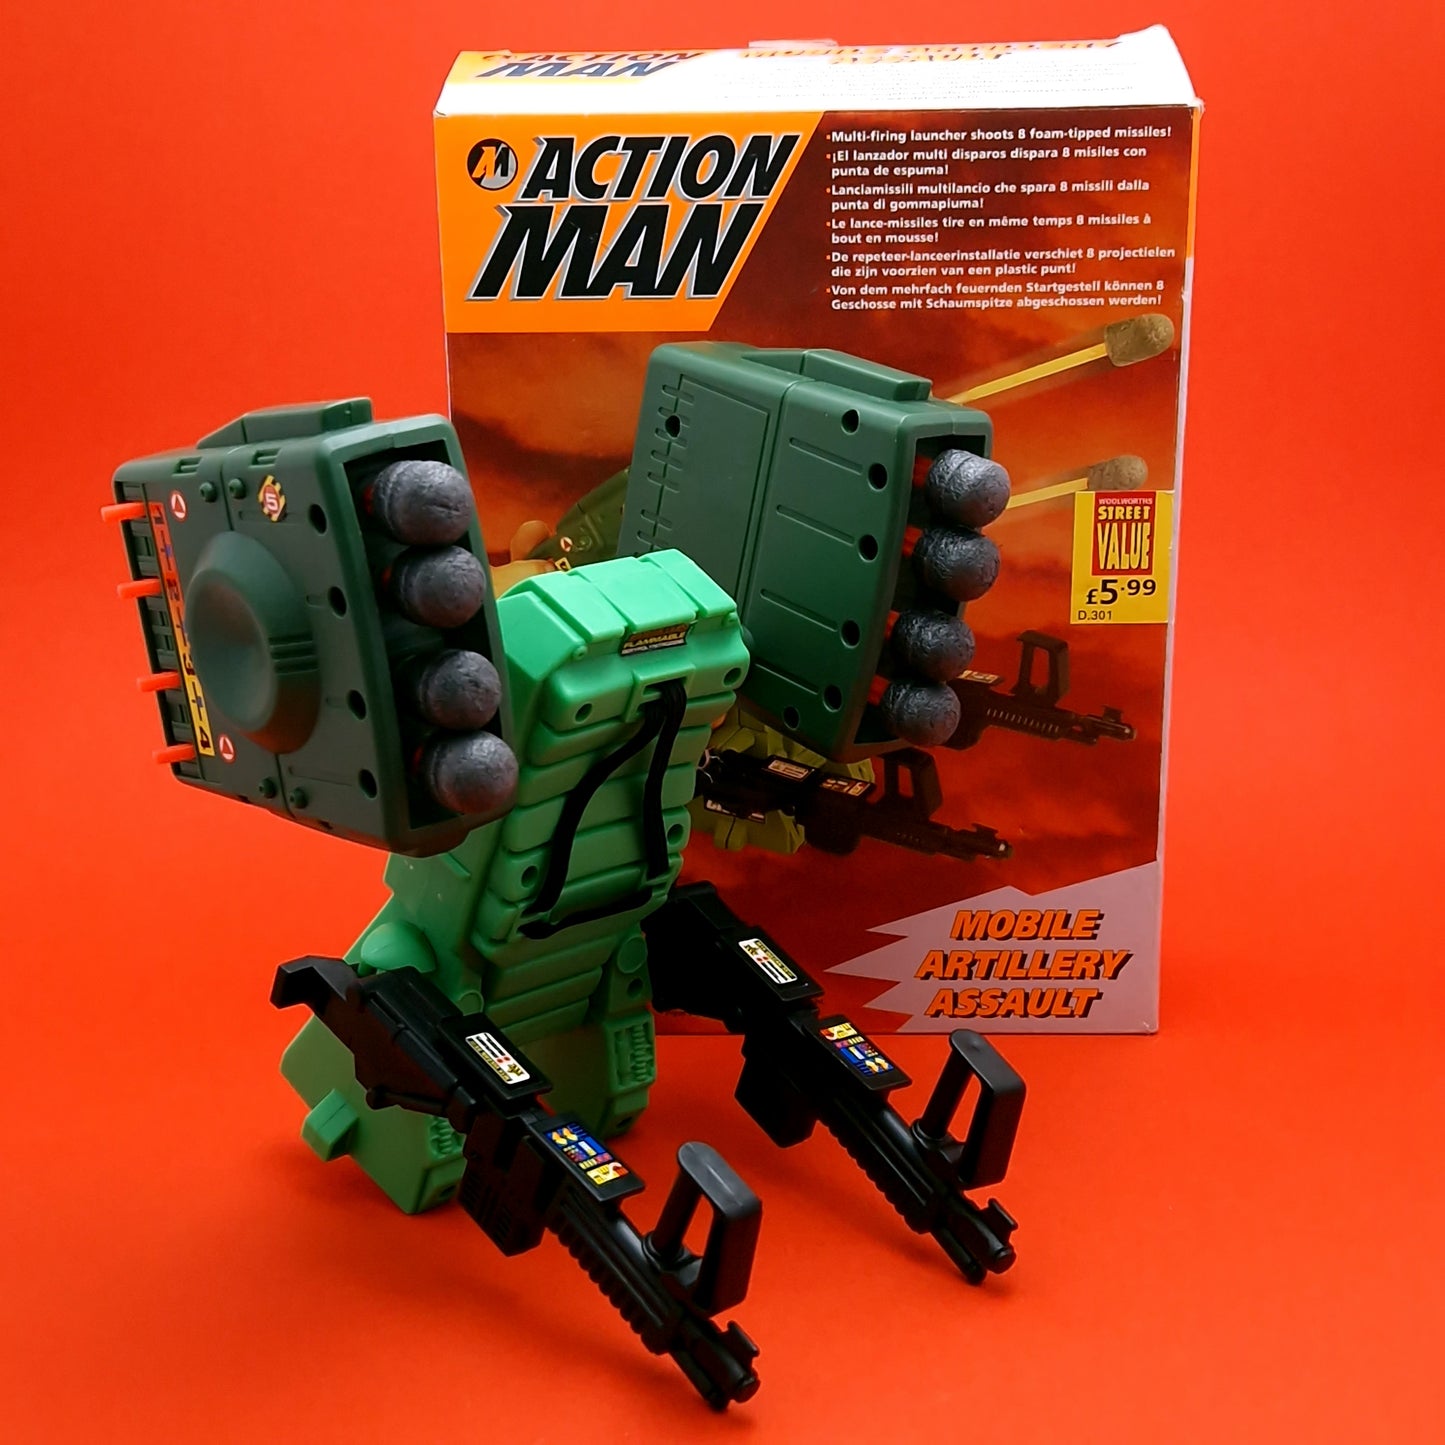 ACTION MAN ☆ MOBILE ARTILLERY ASSAULT BUNDLE ☆ Smart Gun Blaster Backpack HASBRO Boxed 90's